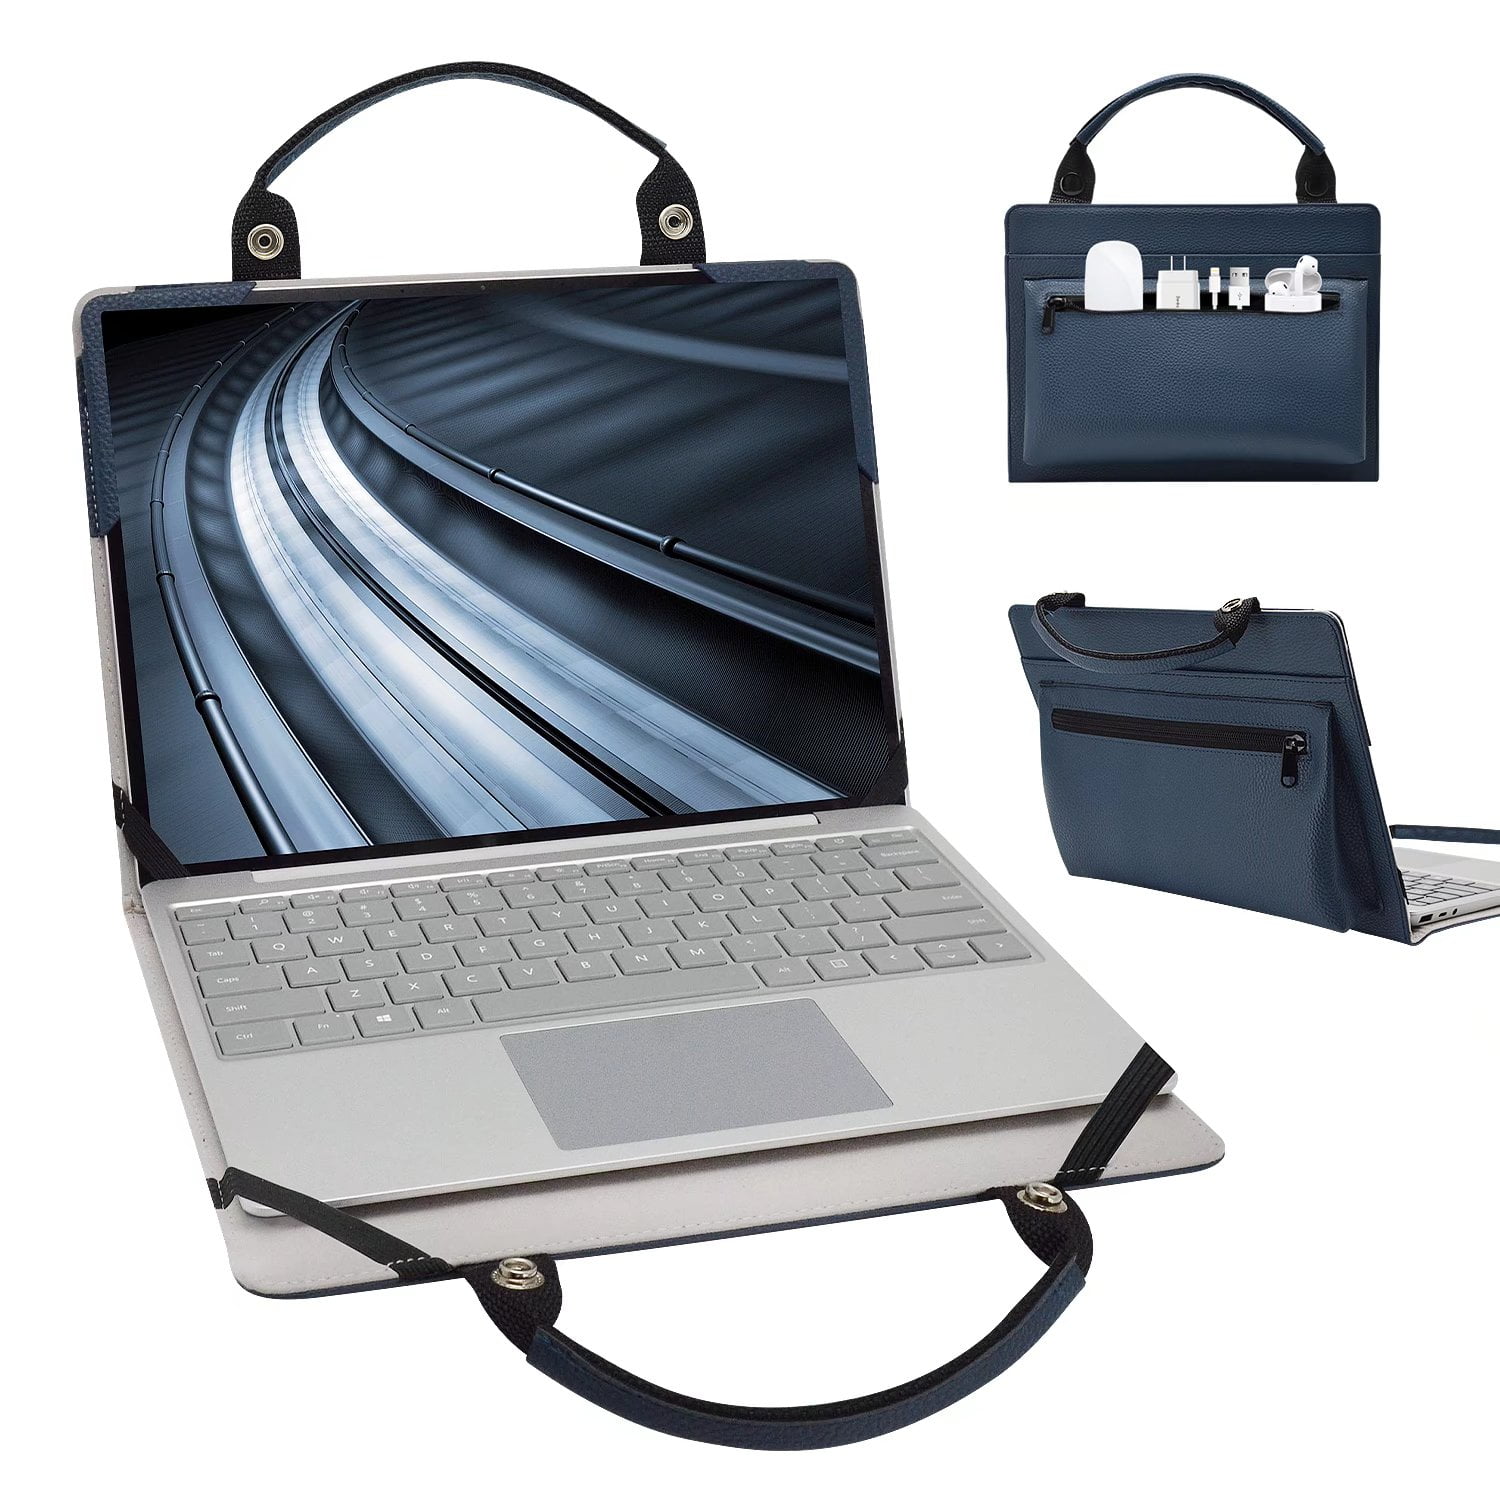 14" 15.6" For HP DELL Computer Notebook PC Laptop Shoulder Bag Cover Case  HOT 